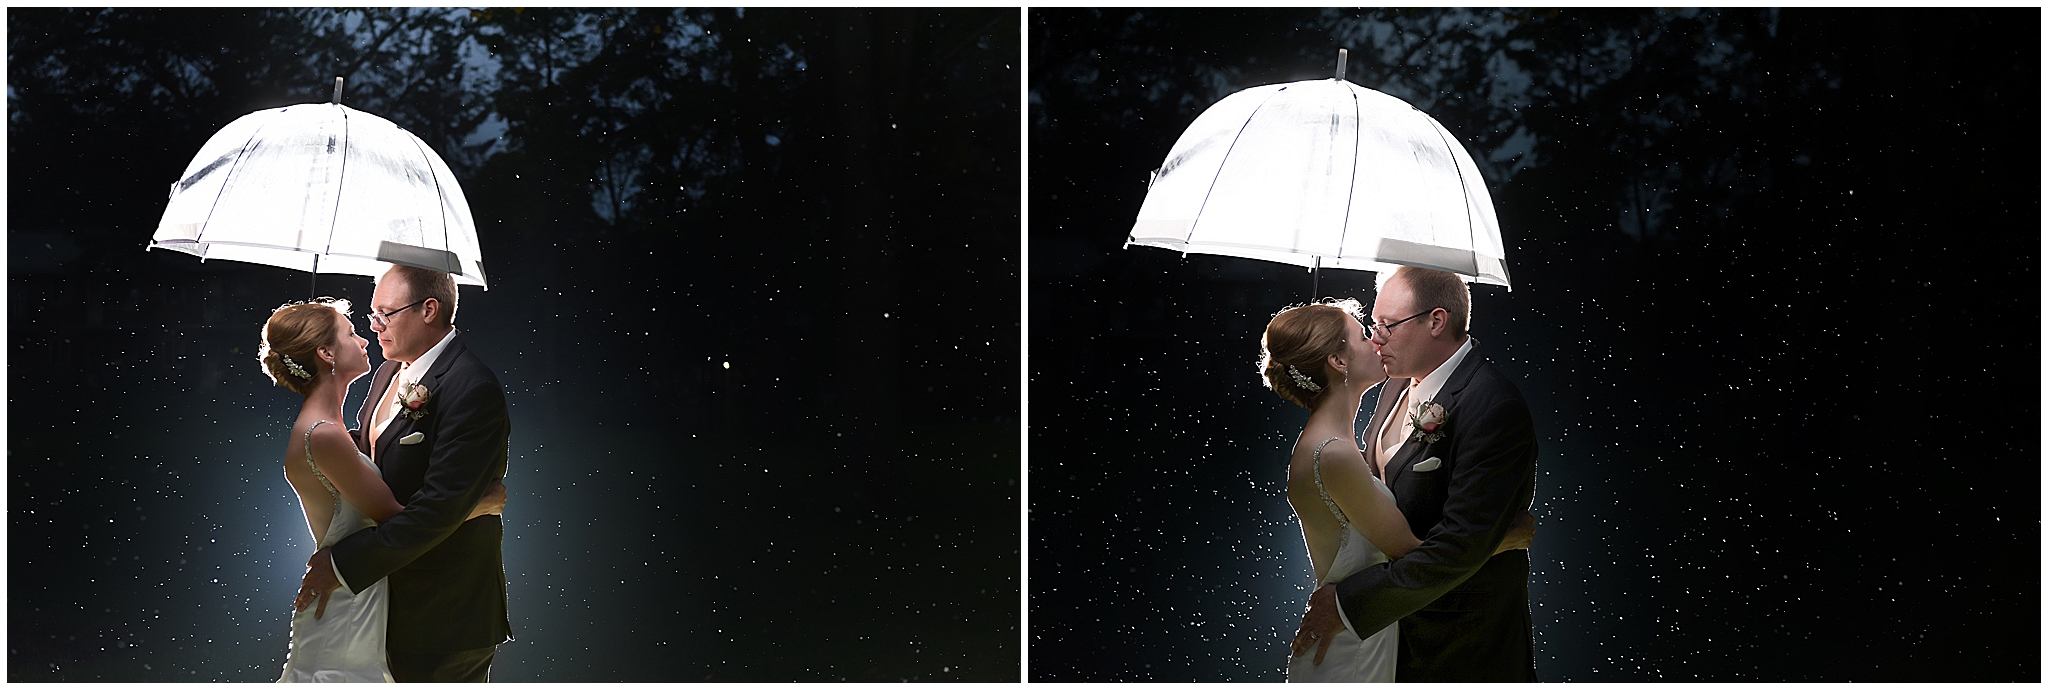 bride and groom with umbrella on rainy night in st. marys ontario